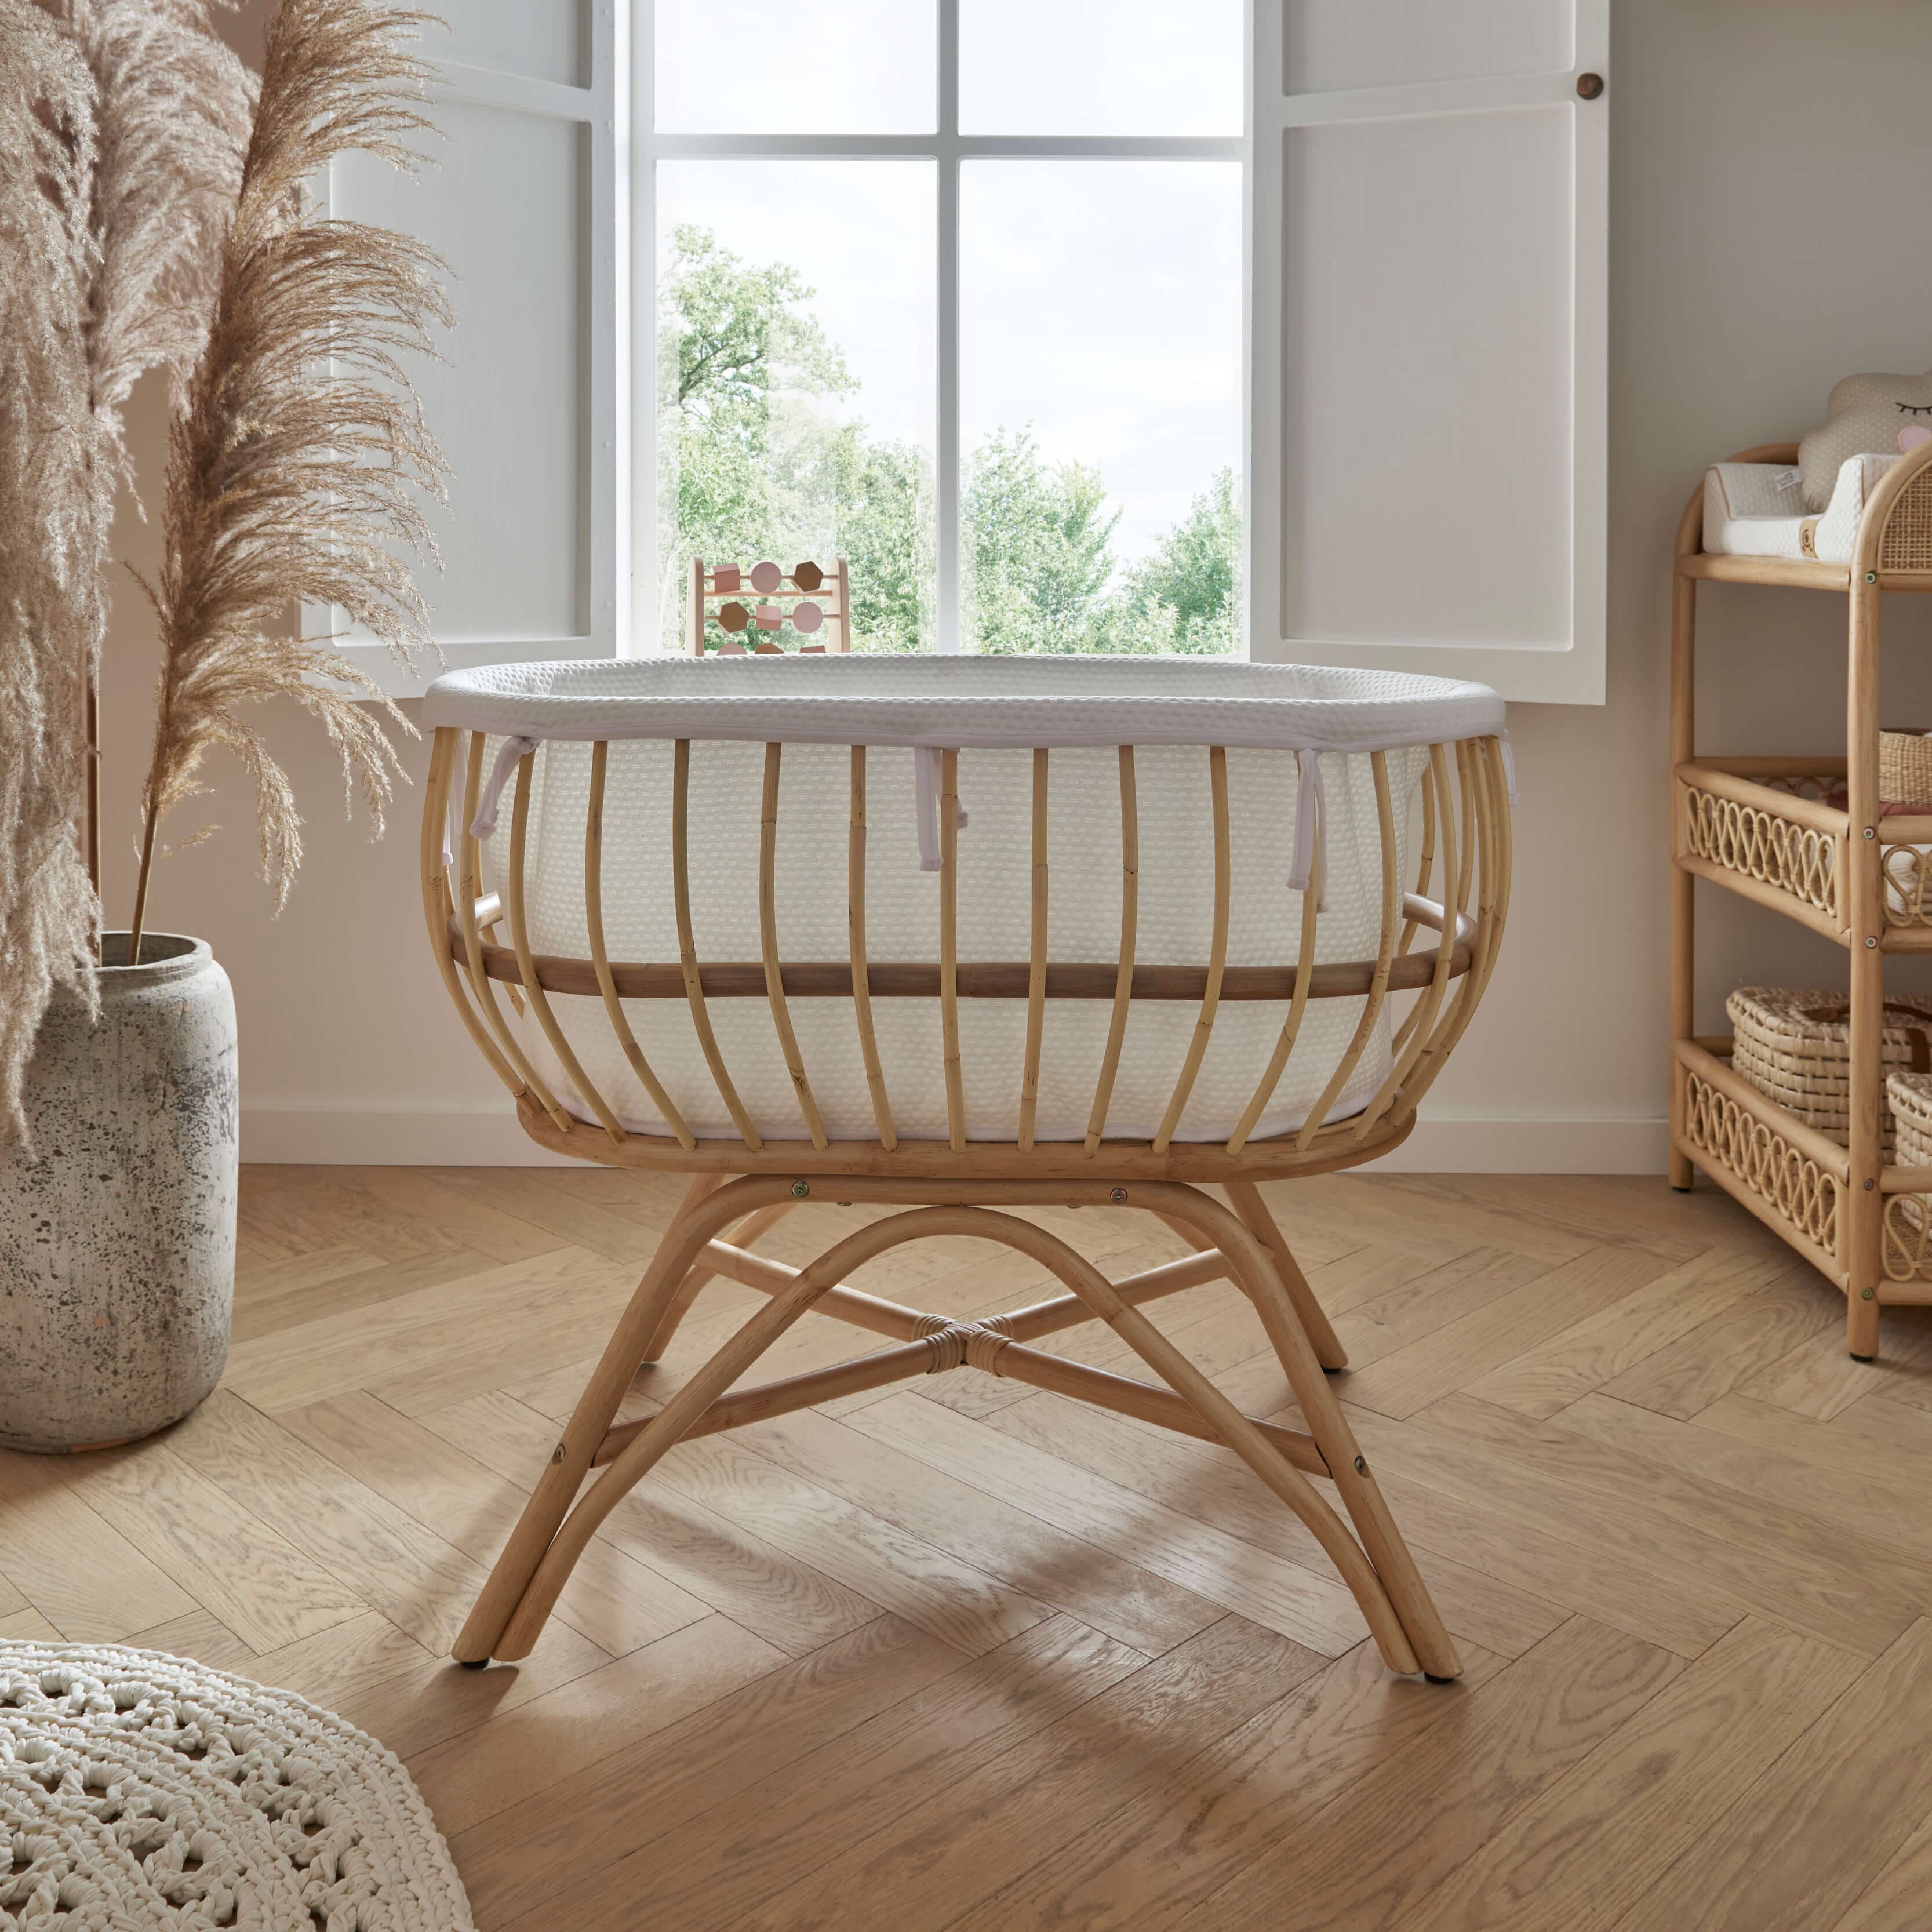 CuddleCo Aria Crib and Hanging Rail Room Set in Rattan Nursery Room Sets FRN/CUD/151168 5060971151168